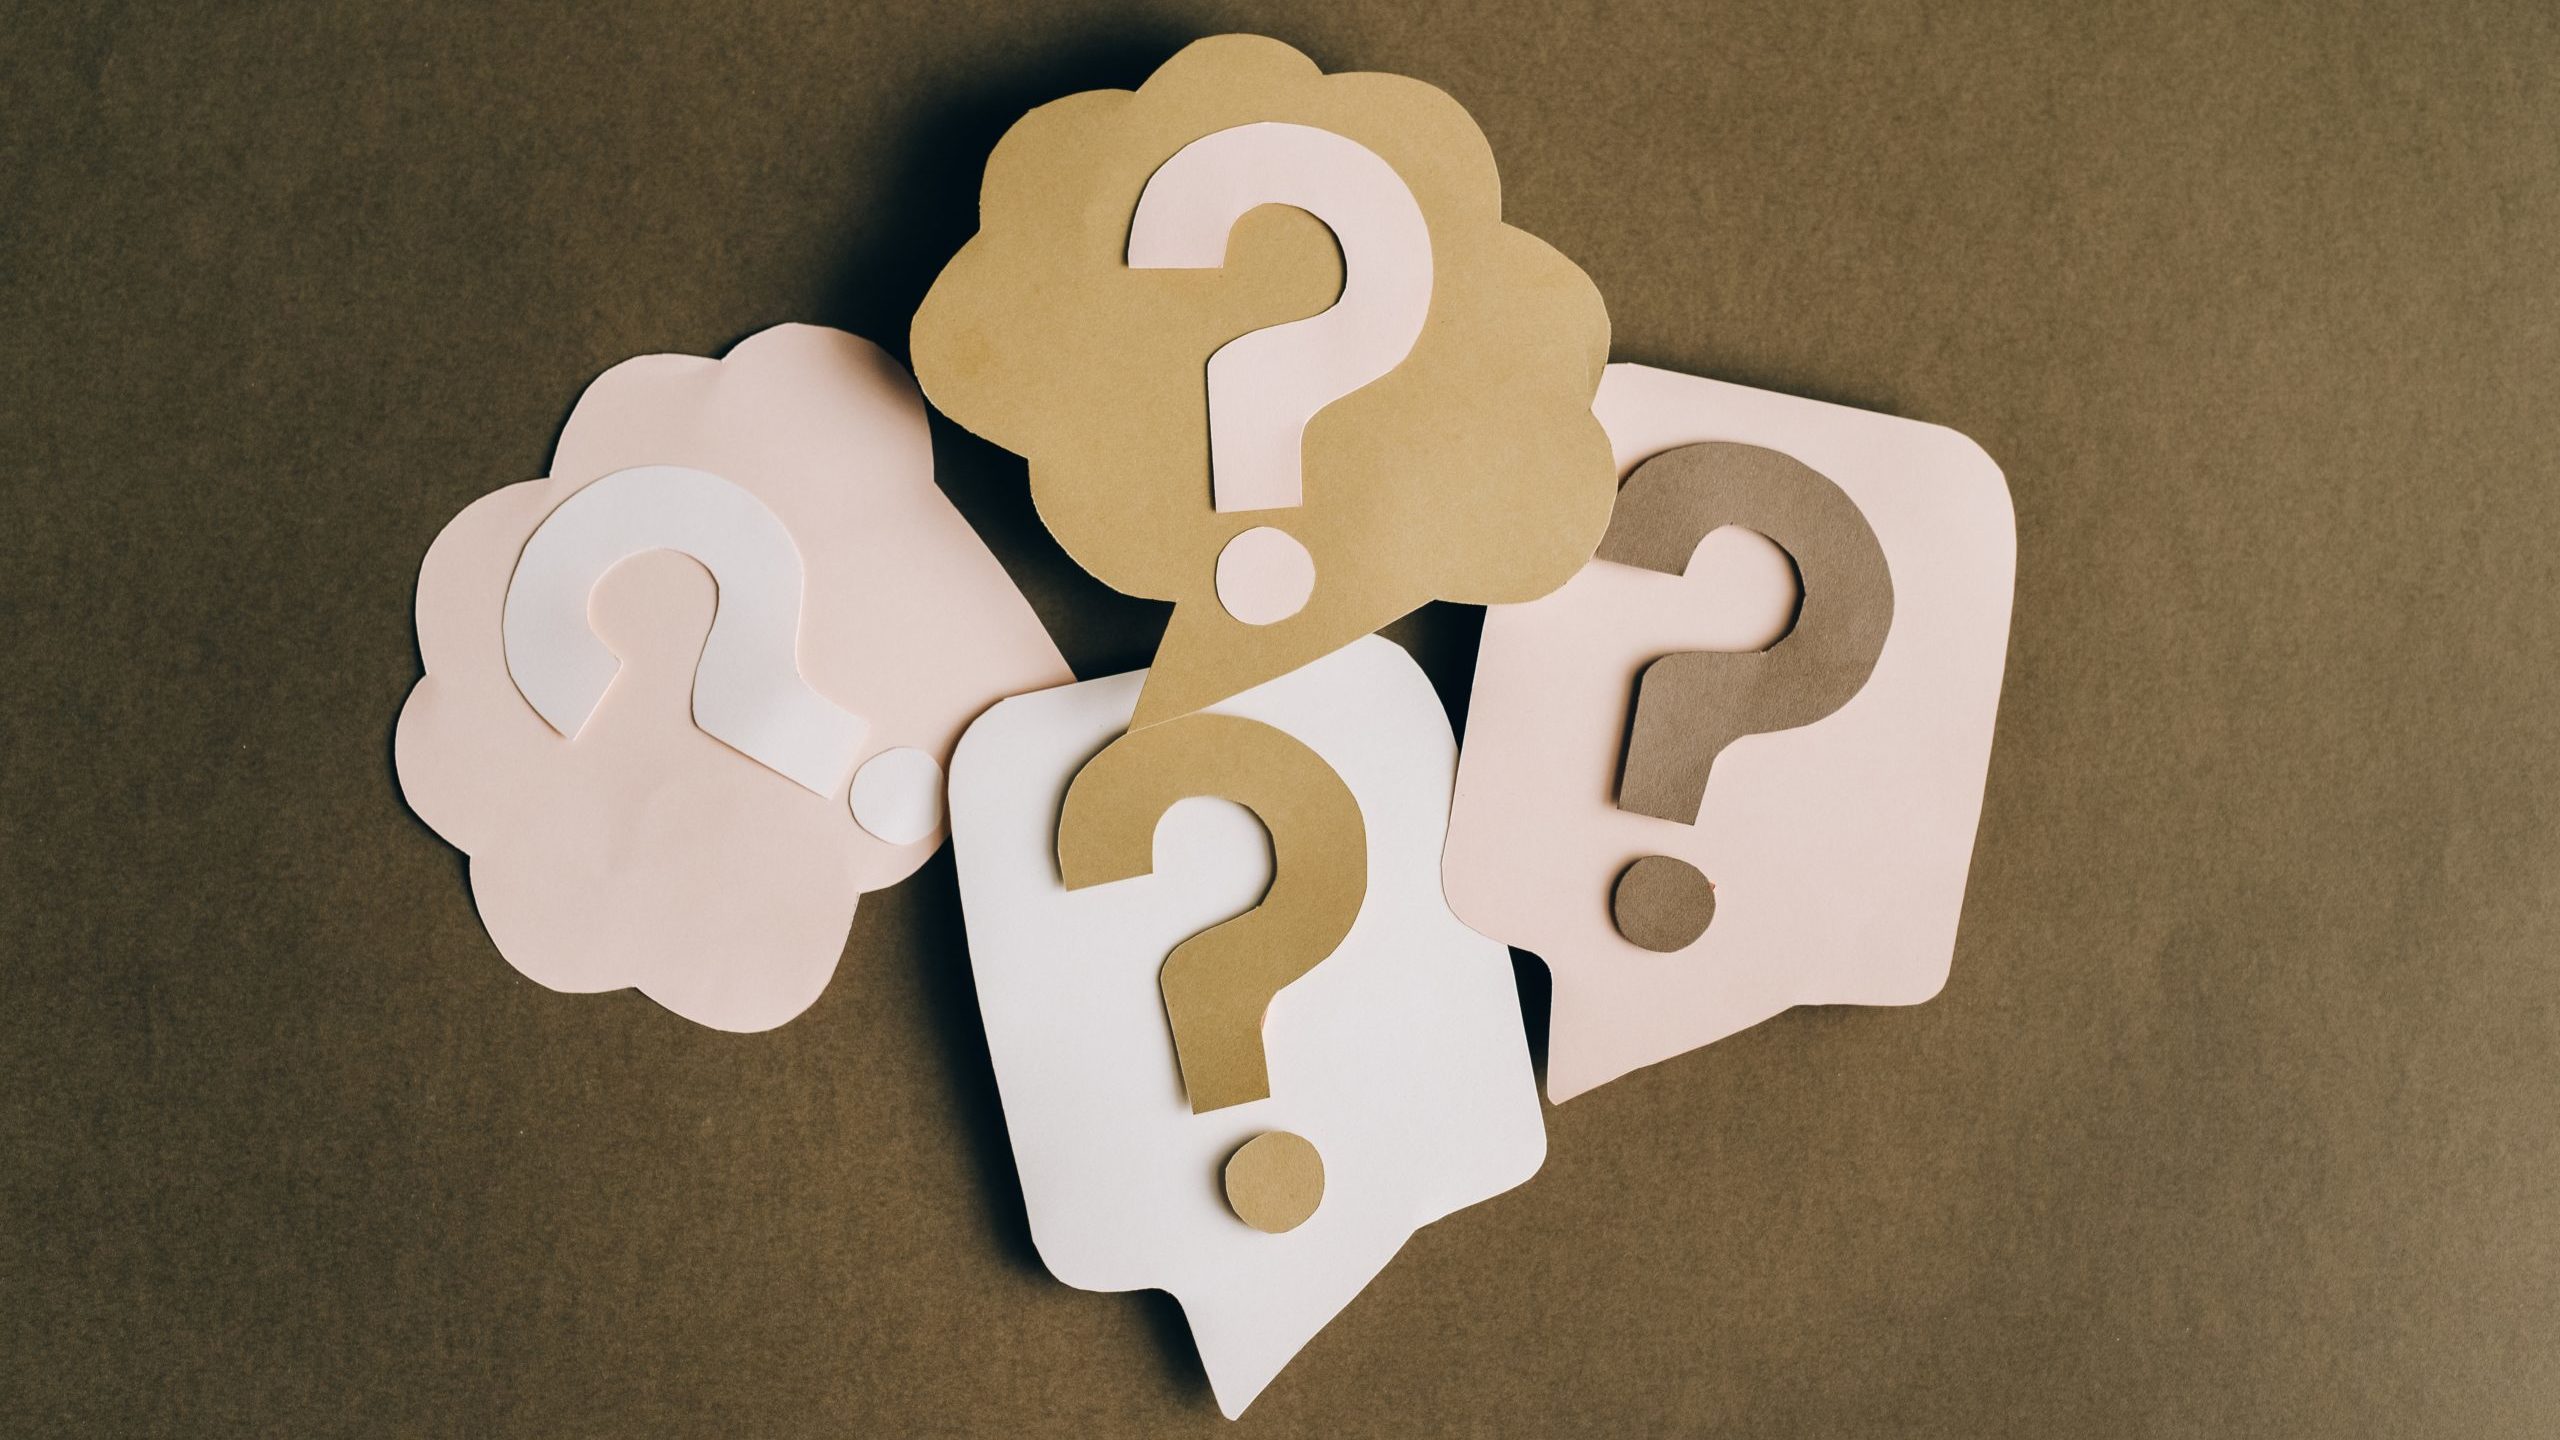 3 Questions A Good Marketing Partner Should Always Ask